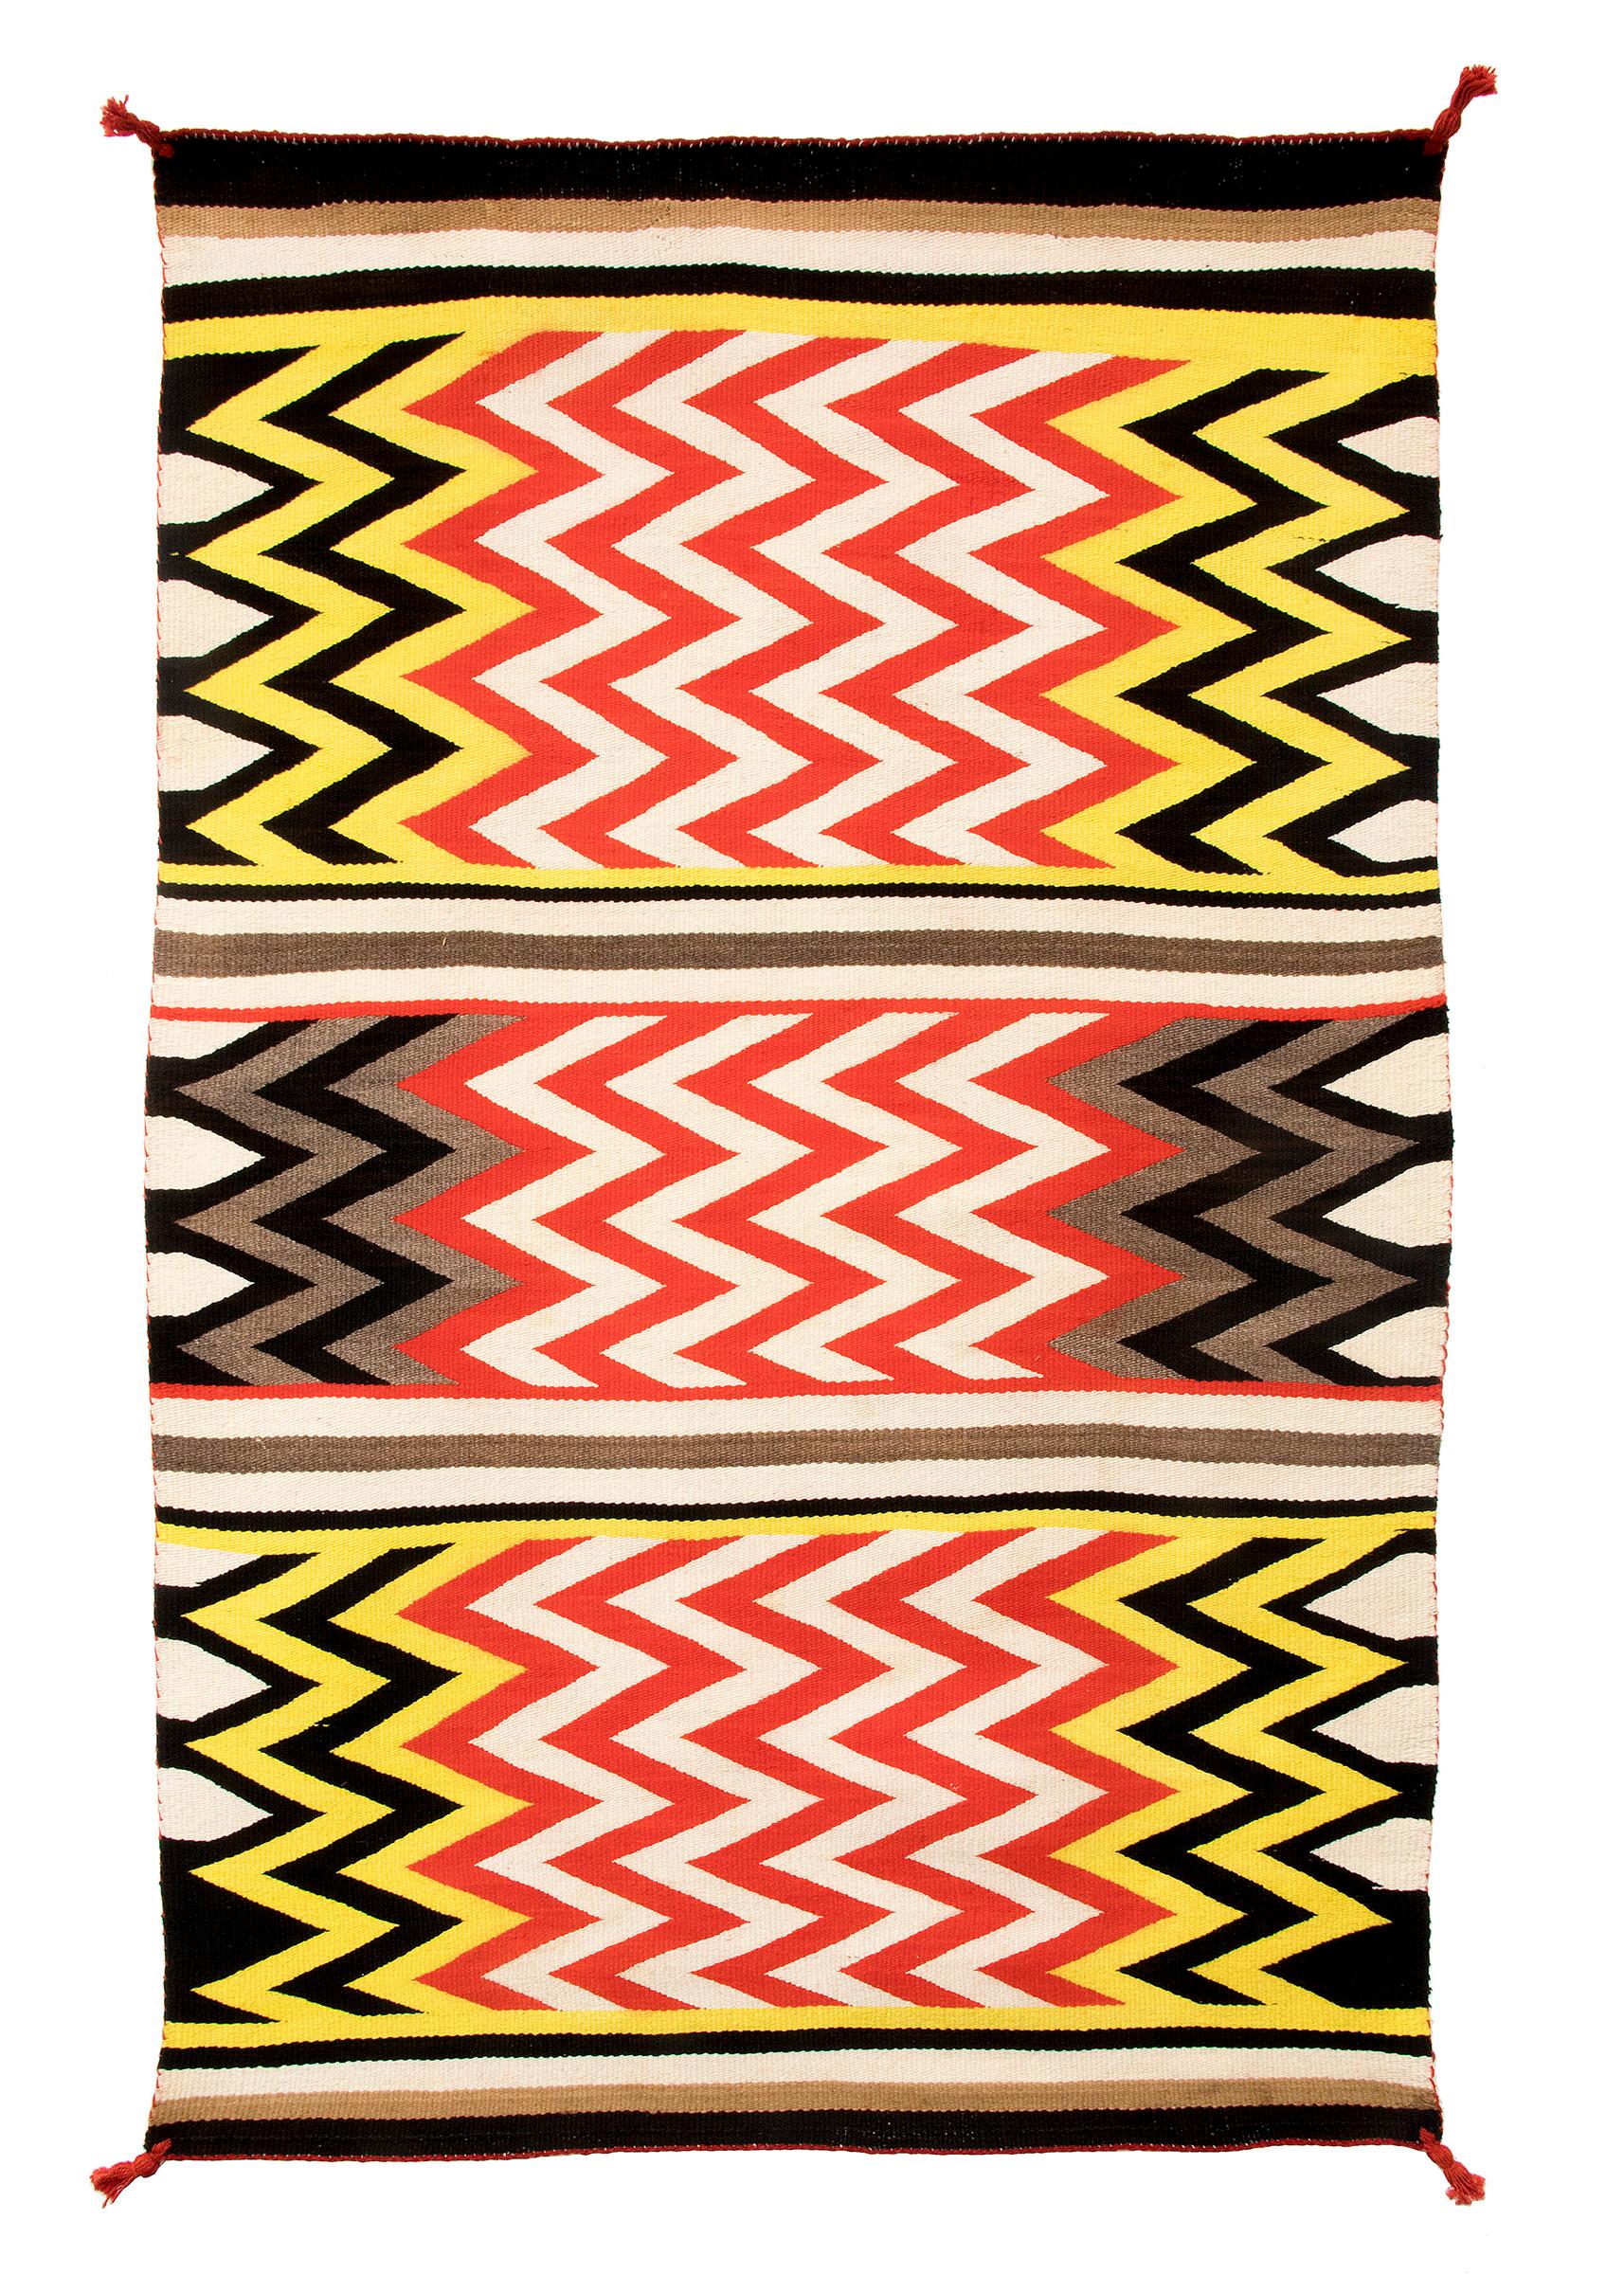 Mid-20th Century Vintage Navajo Rug, Lightning Pattern, circa 1935, Yellow, Red, Black, & White